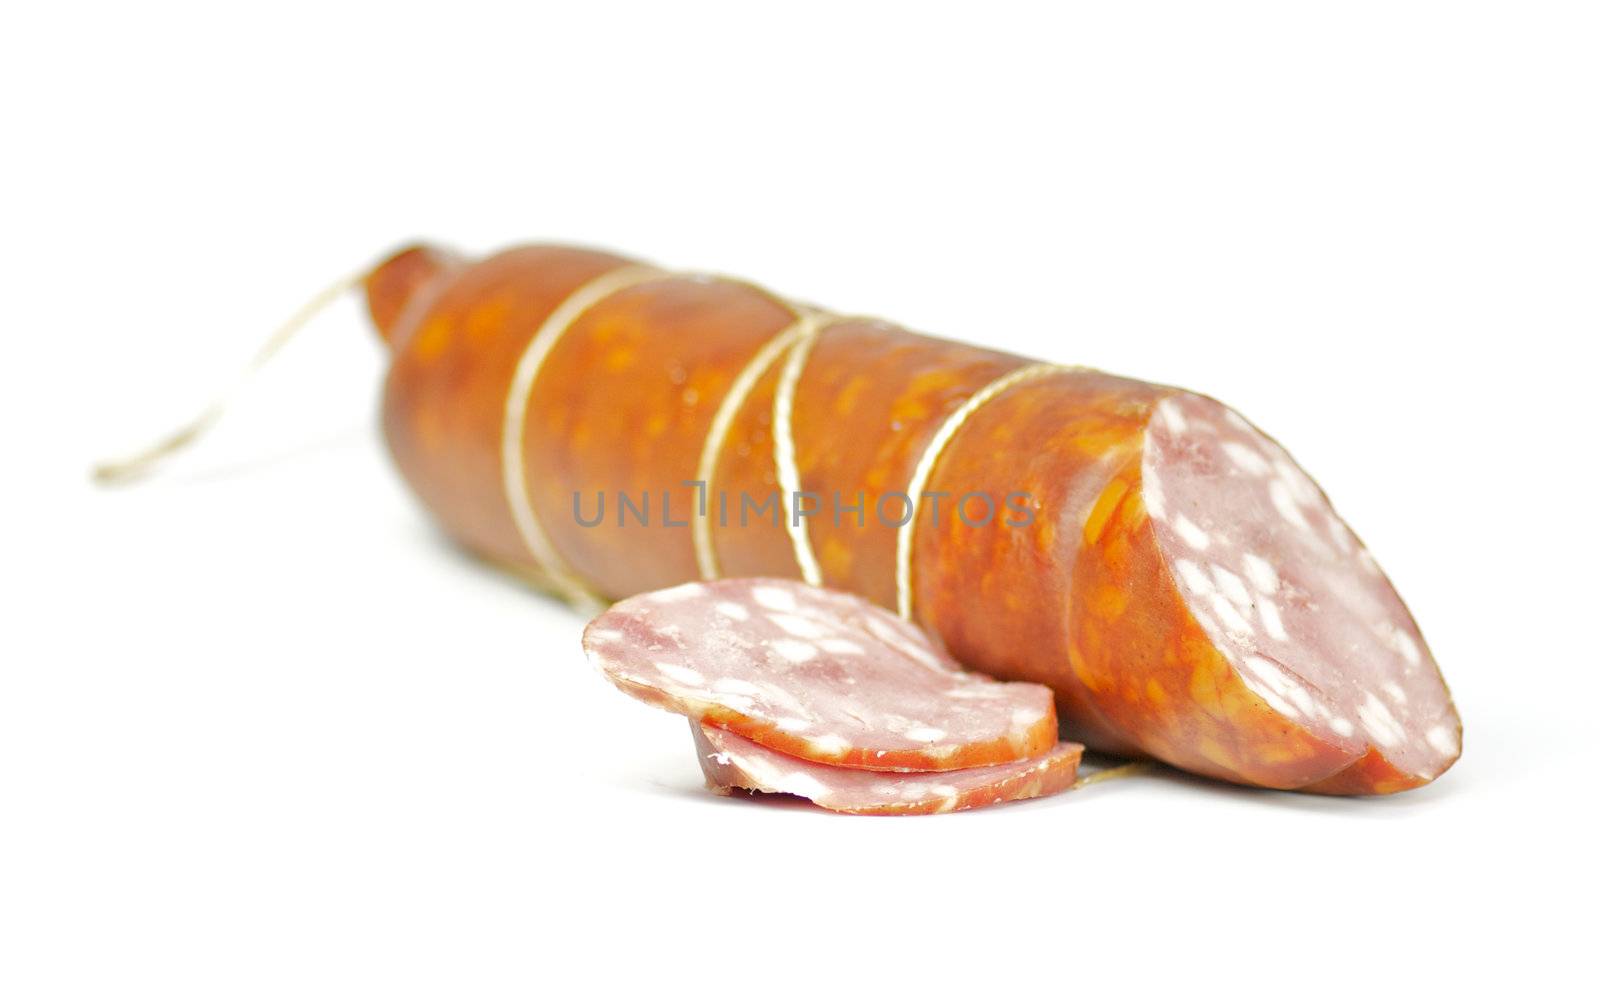 Sausage long loaf by zhekos